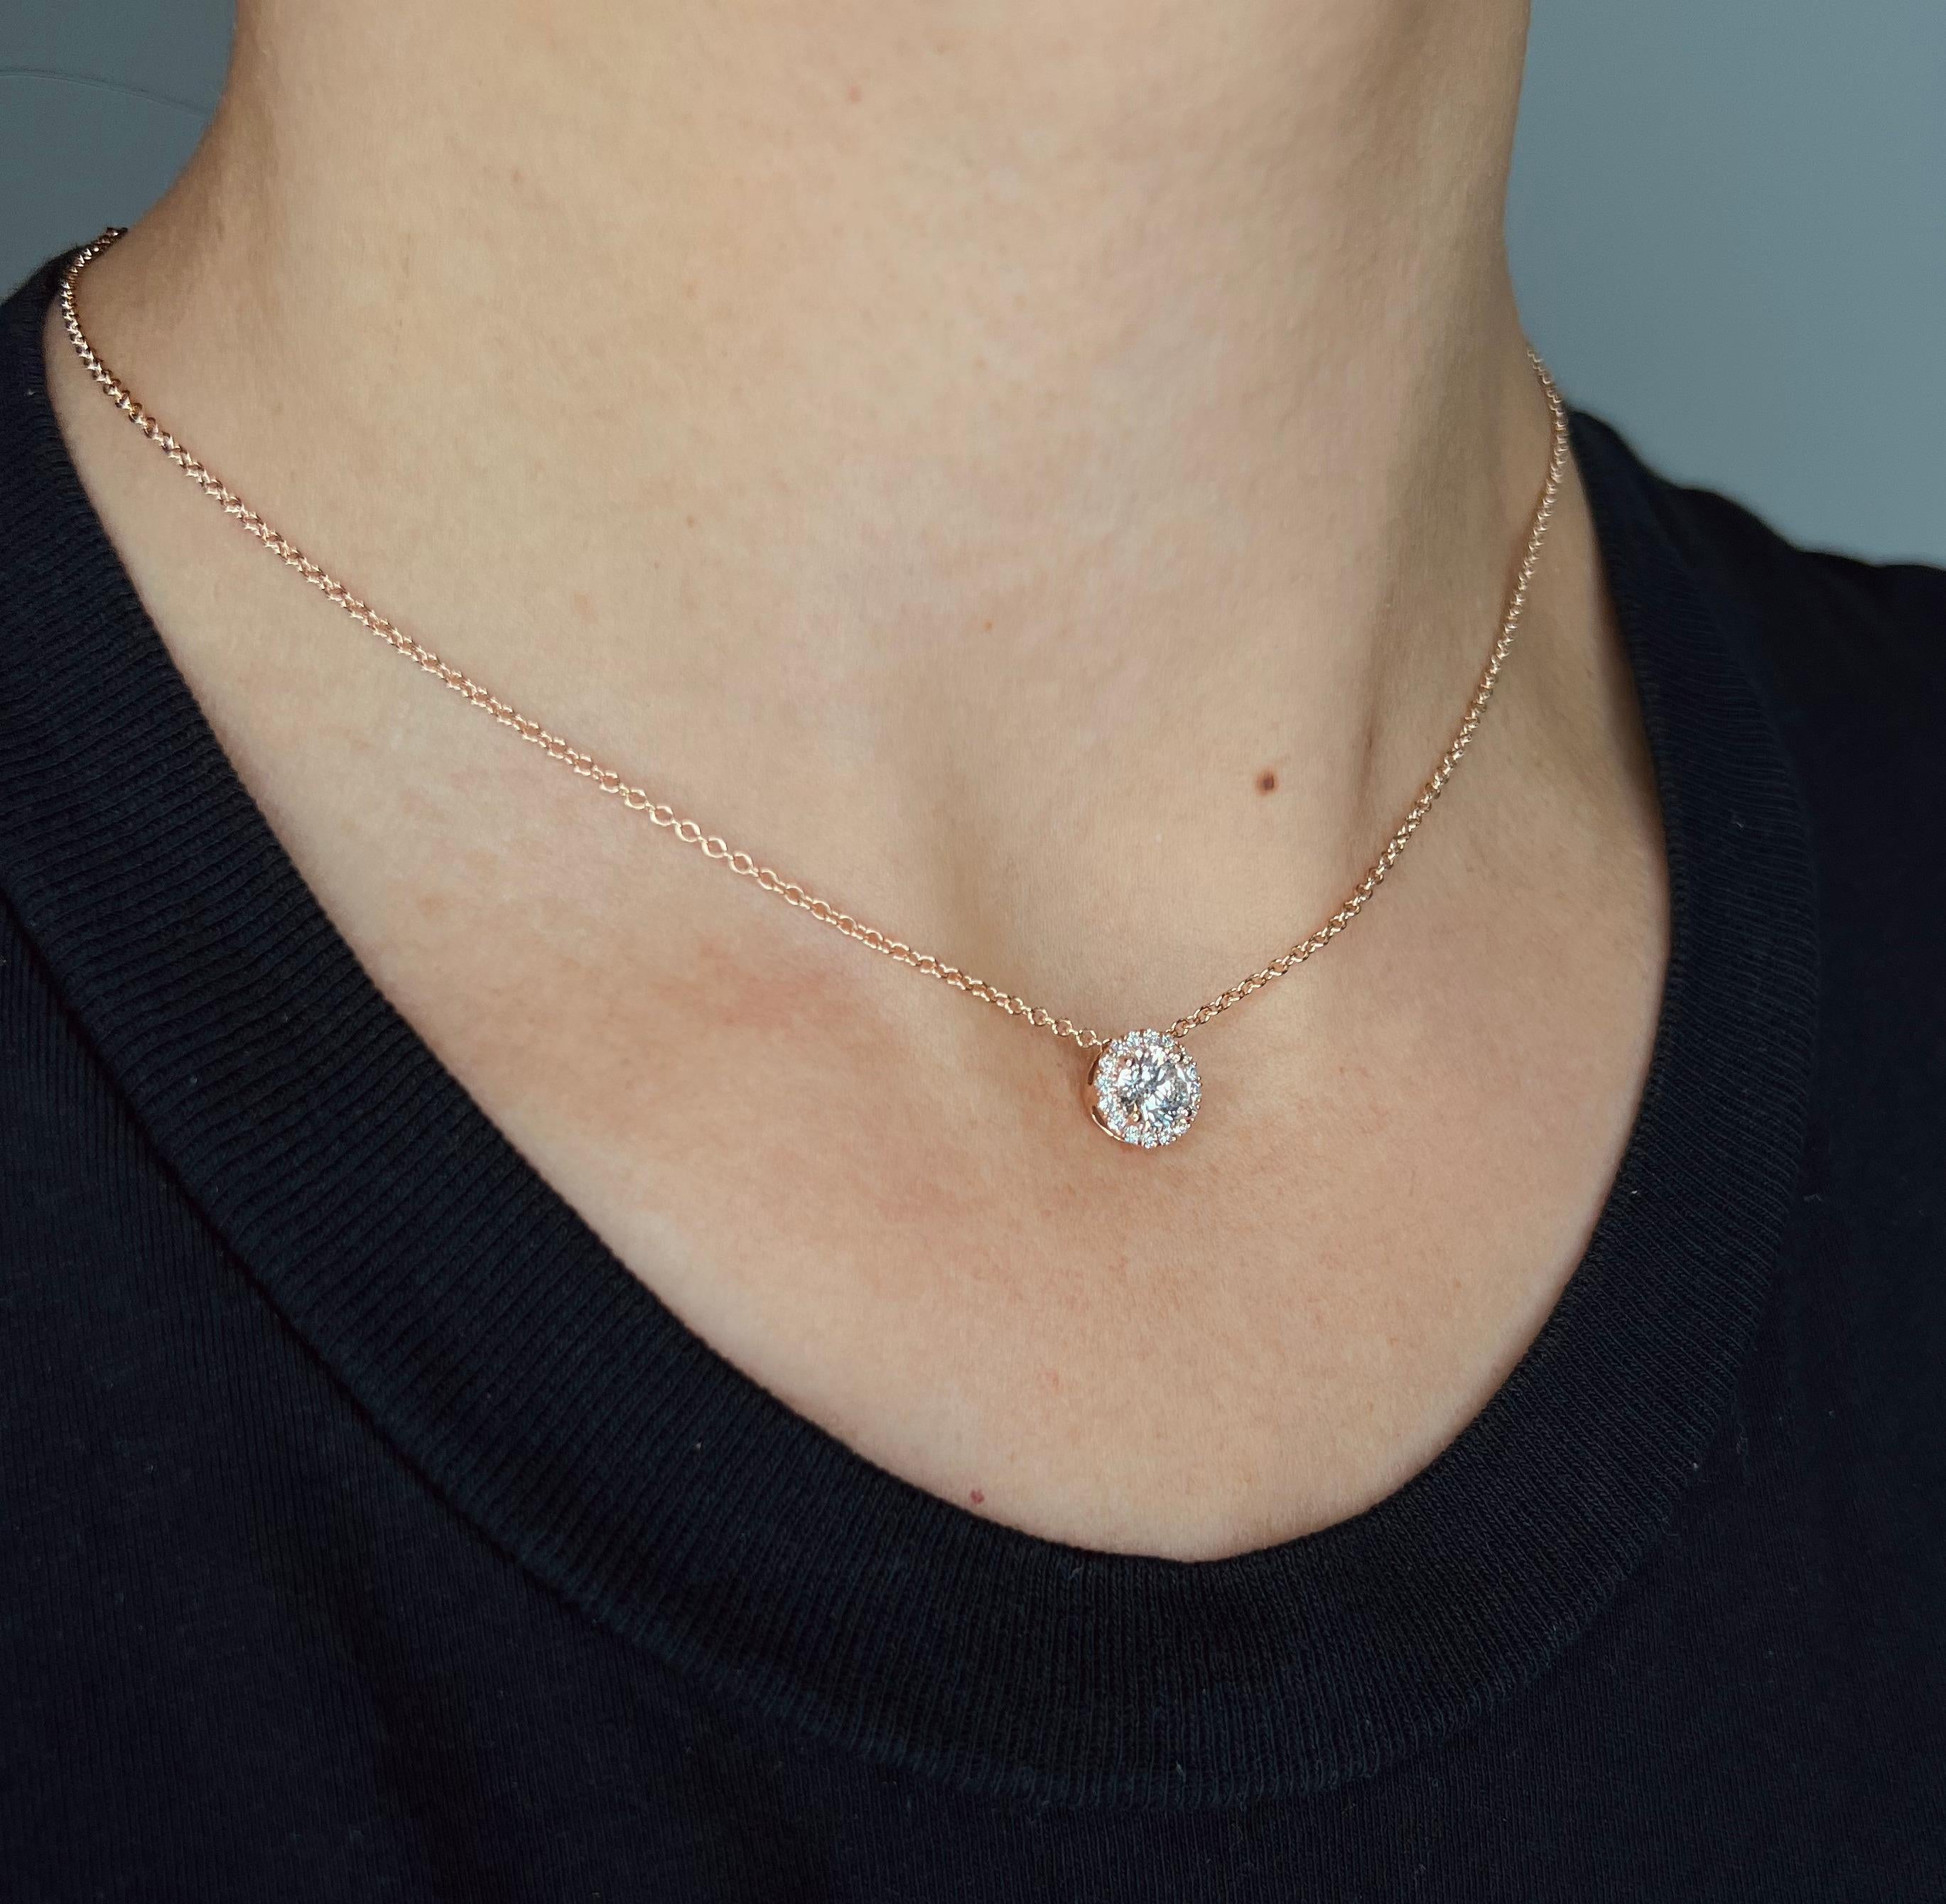 Women's or Men's 24 Inch 14k White Gold 1.15 Carat Round Cut Diamond Solitaire Pendant Necklace For Sale